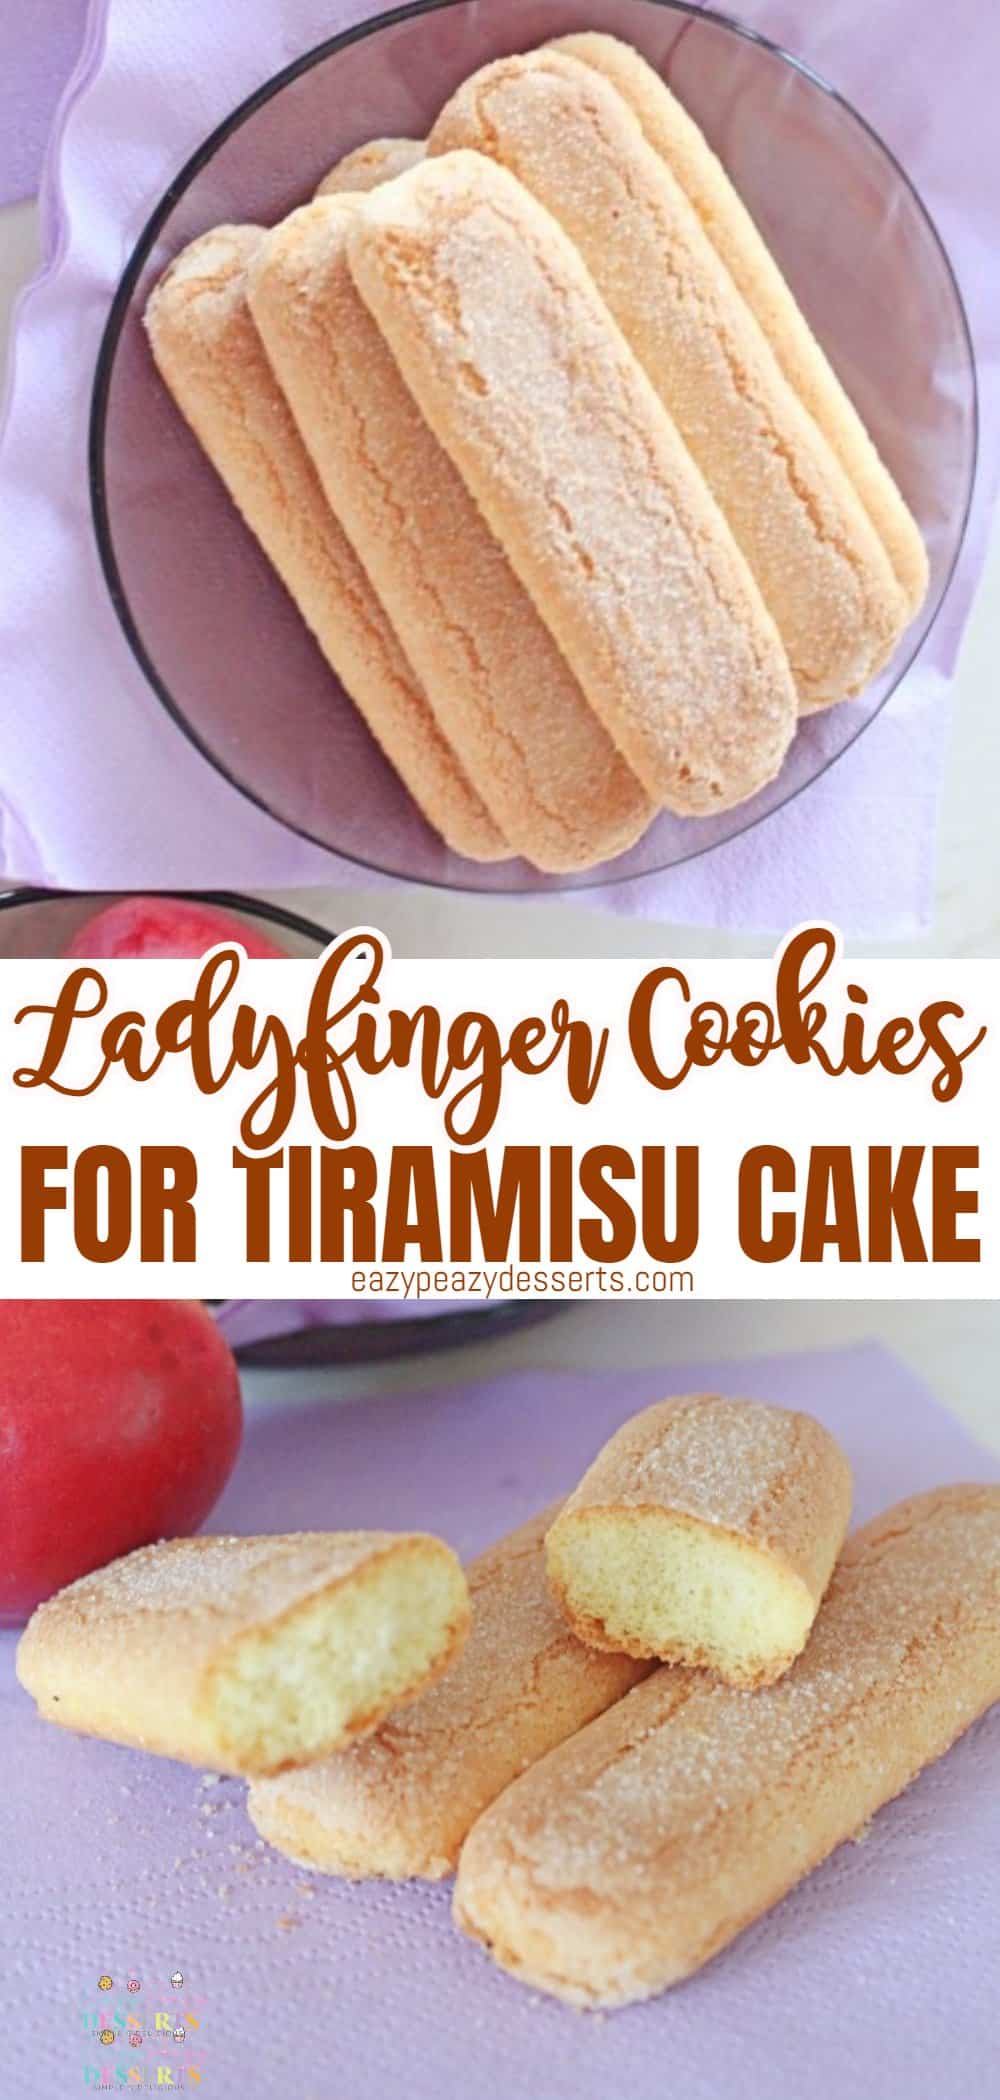 Homemade ladyfinger cookies for tiramisu cake